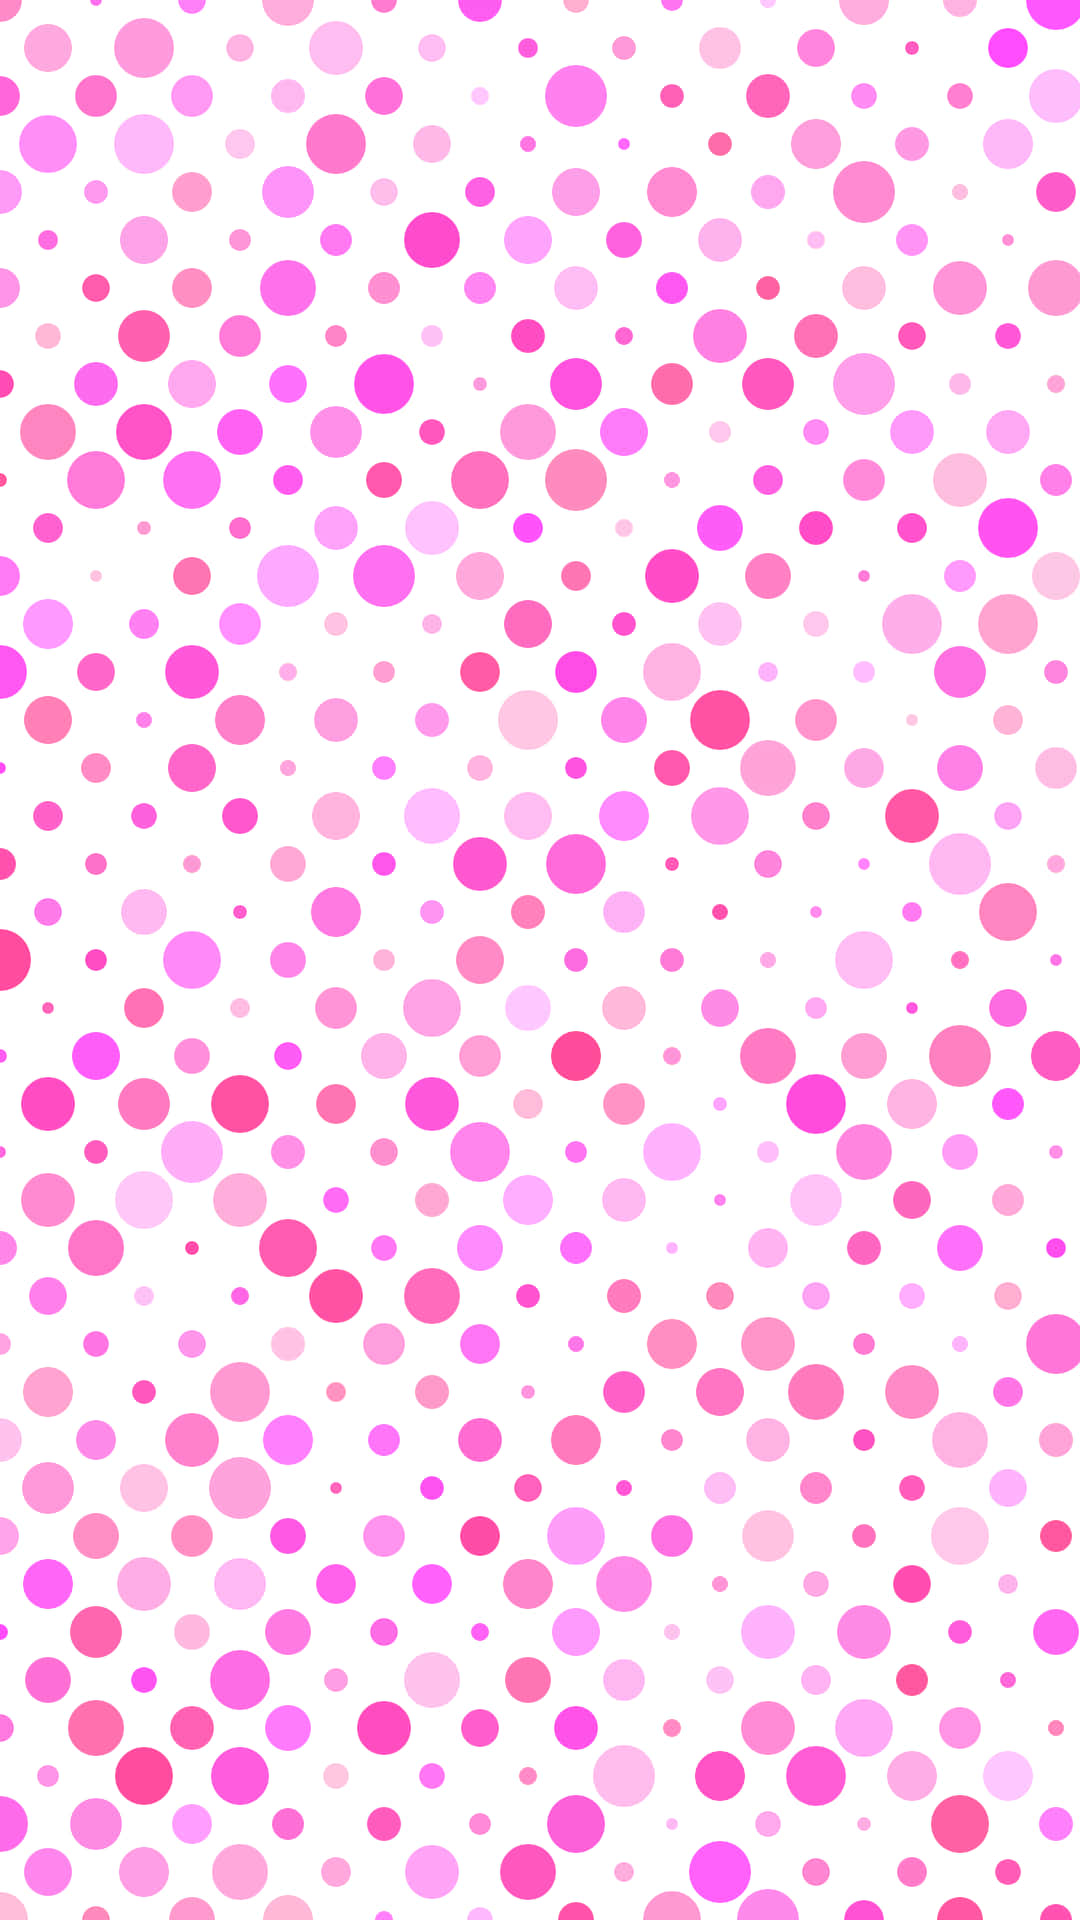 Different Shades Of Pink Polka Dot Wallpaper